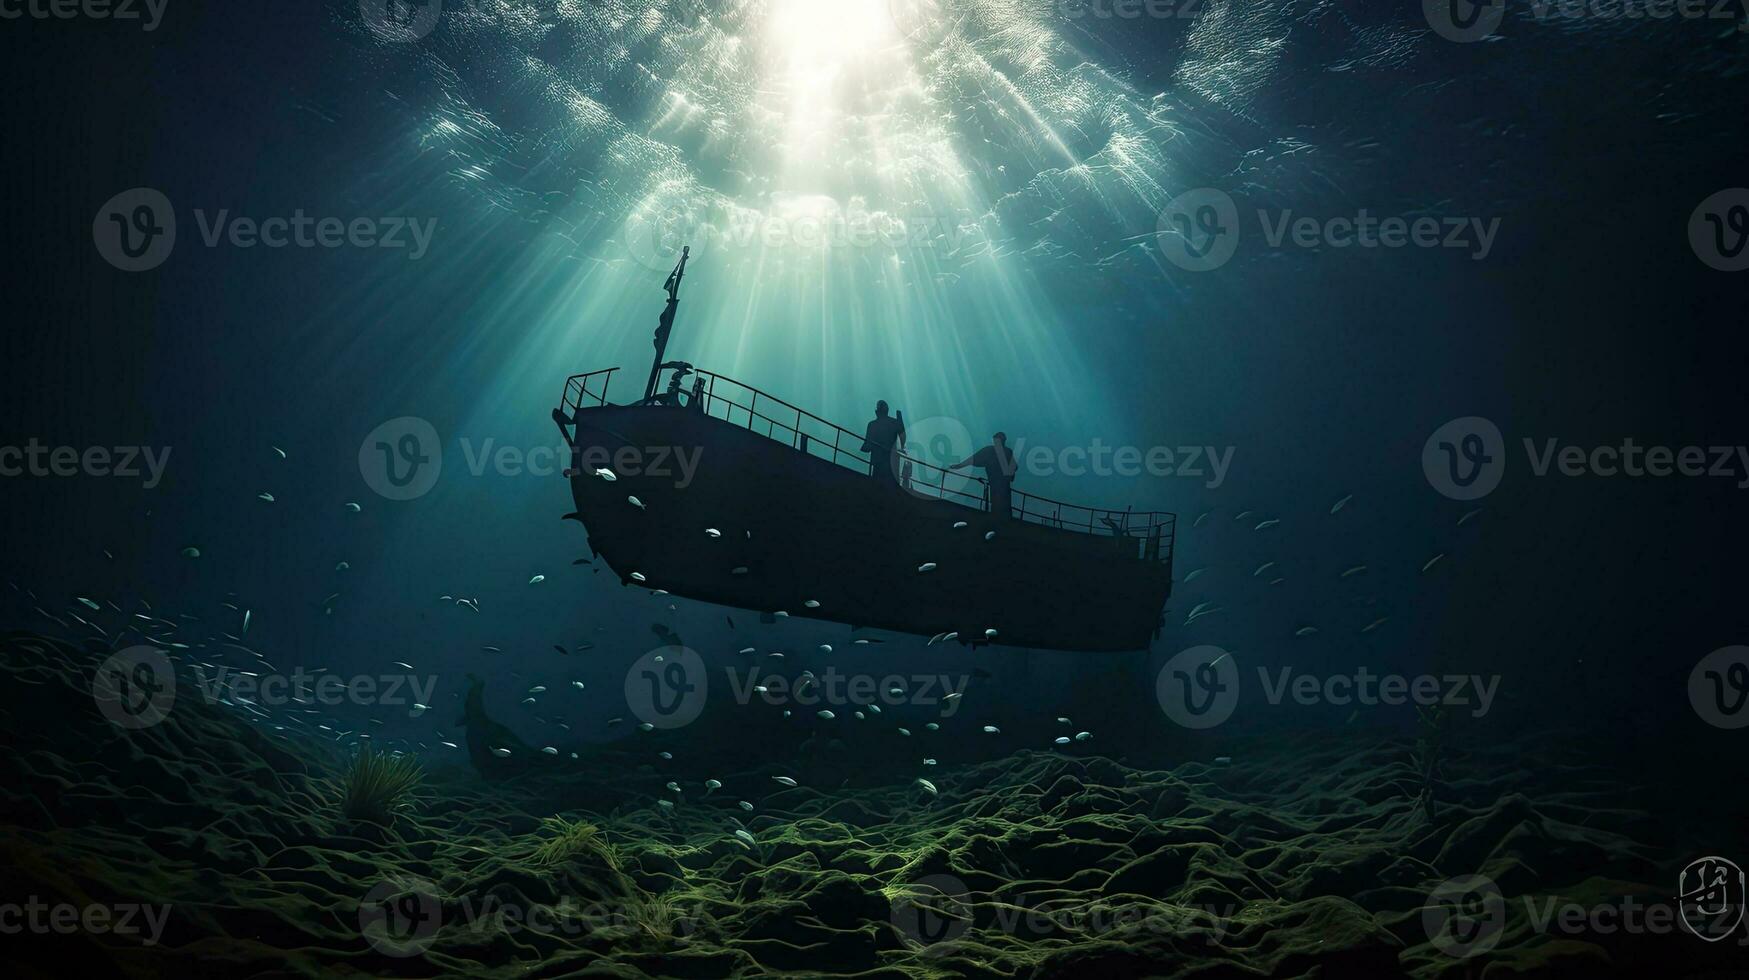 Underwater boat silhouette photo